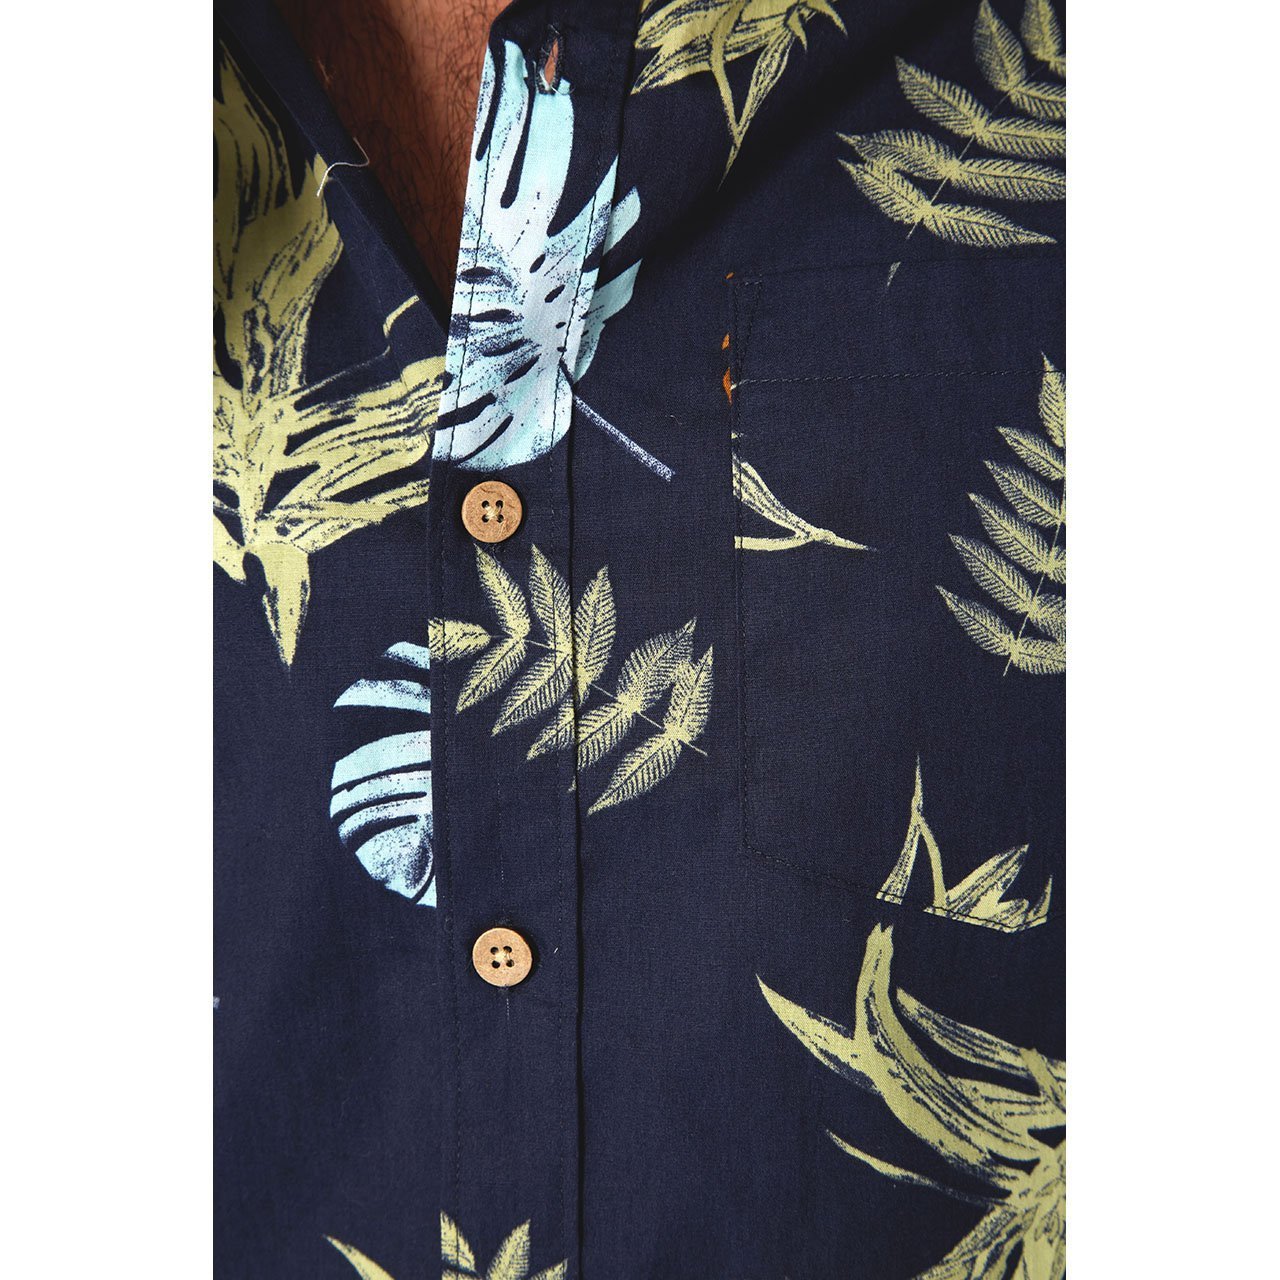 PX Clothing Men's Parker Floral Shirt - Men - Apparel - Shirts - Short Sleeve Shirts - Benn~Burry